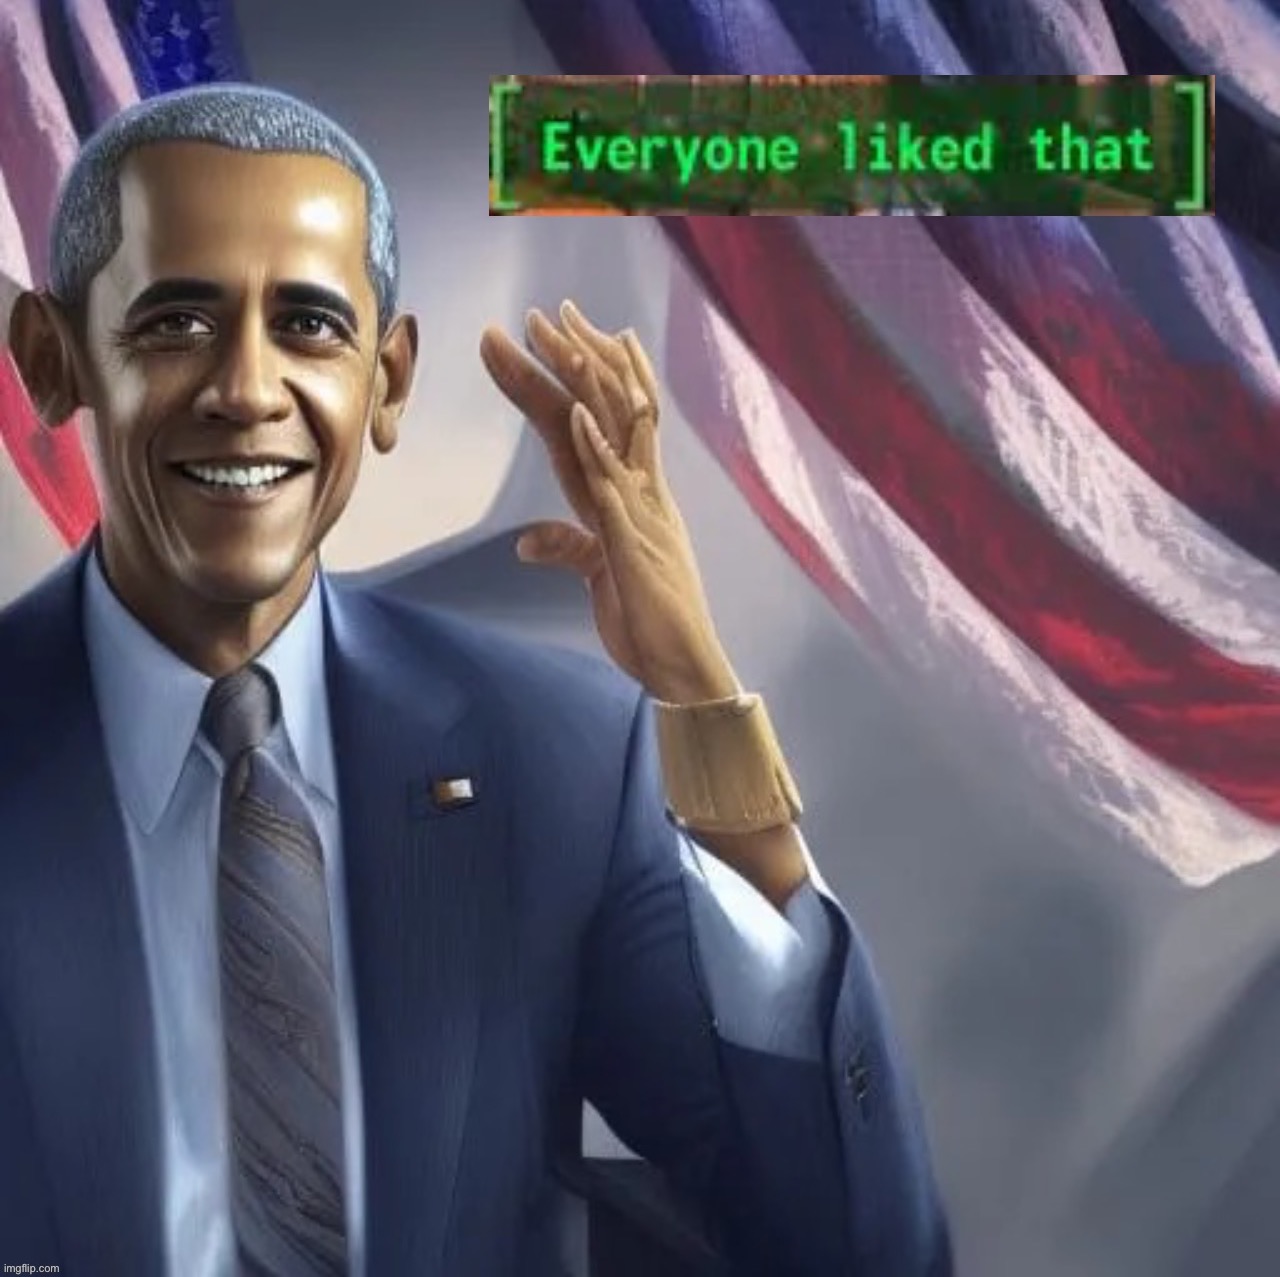 Barack Obama fingers everyone liked that | image tagged in barack obama fingers everyone liked that | made w/ Imgflip meme maker